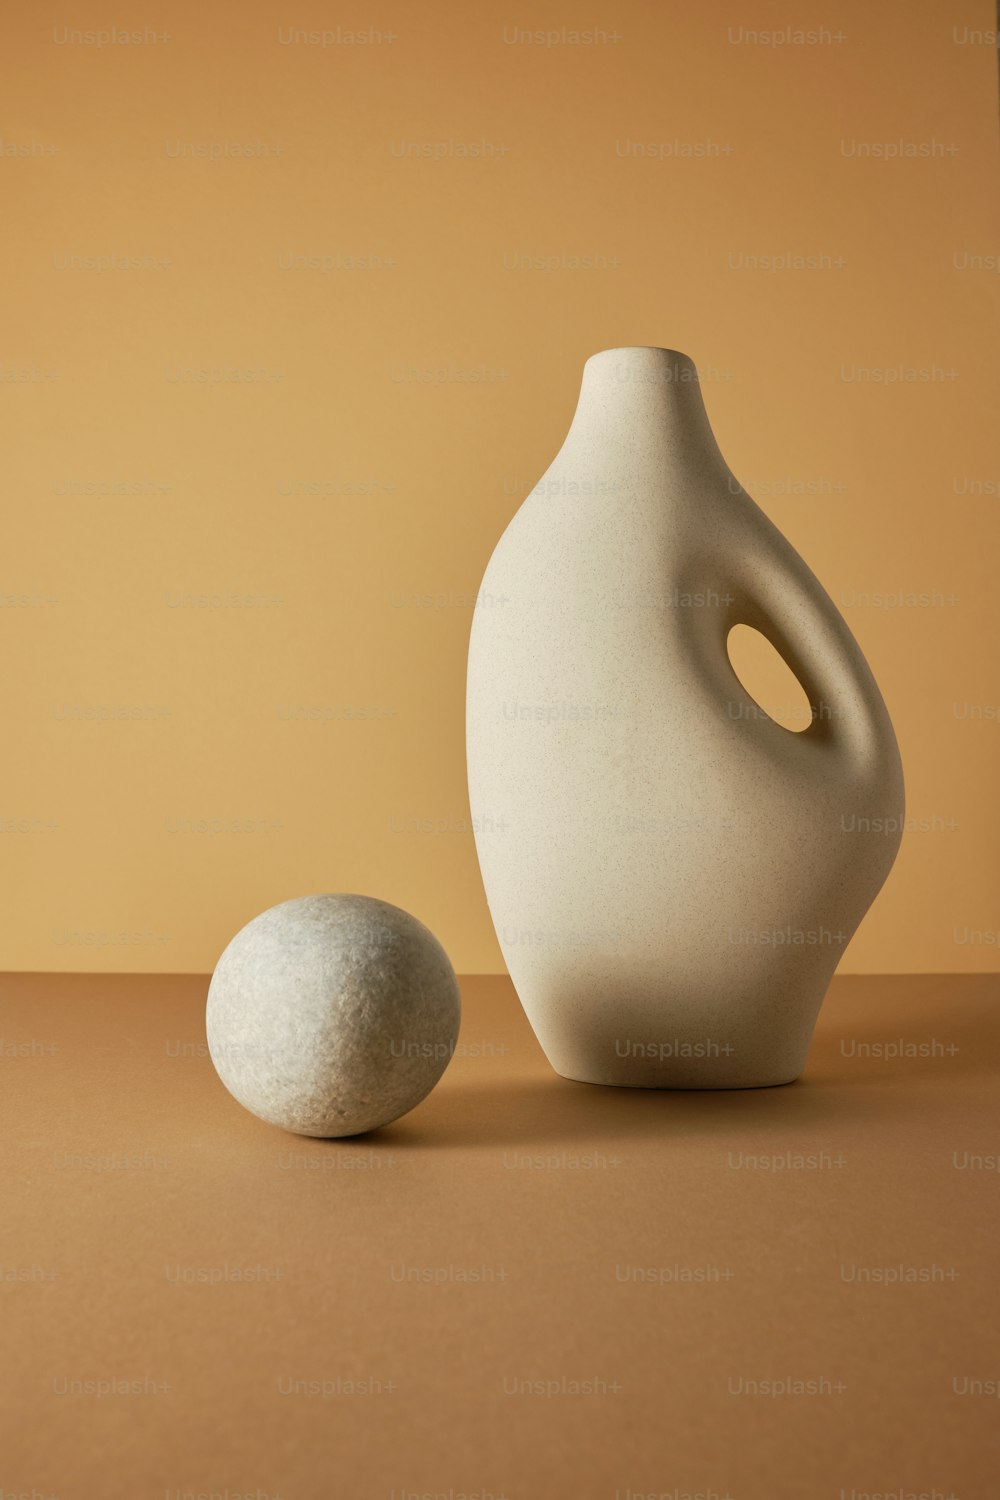 a white vase sitting next to a white ball on a table